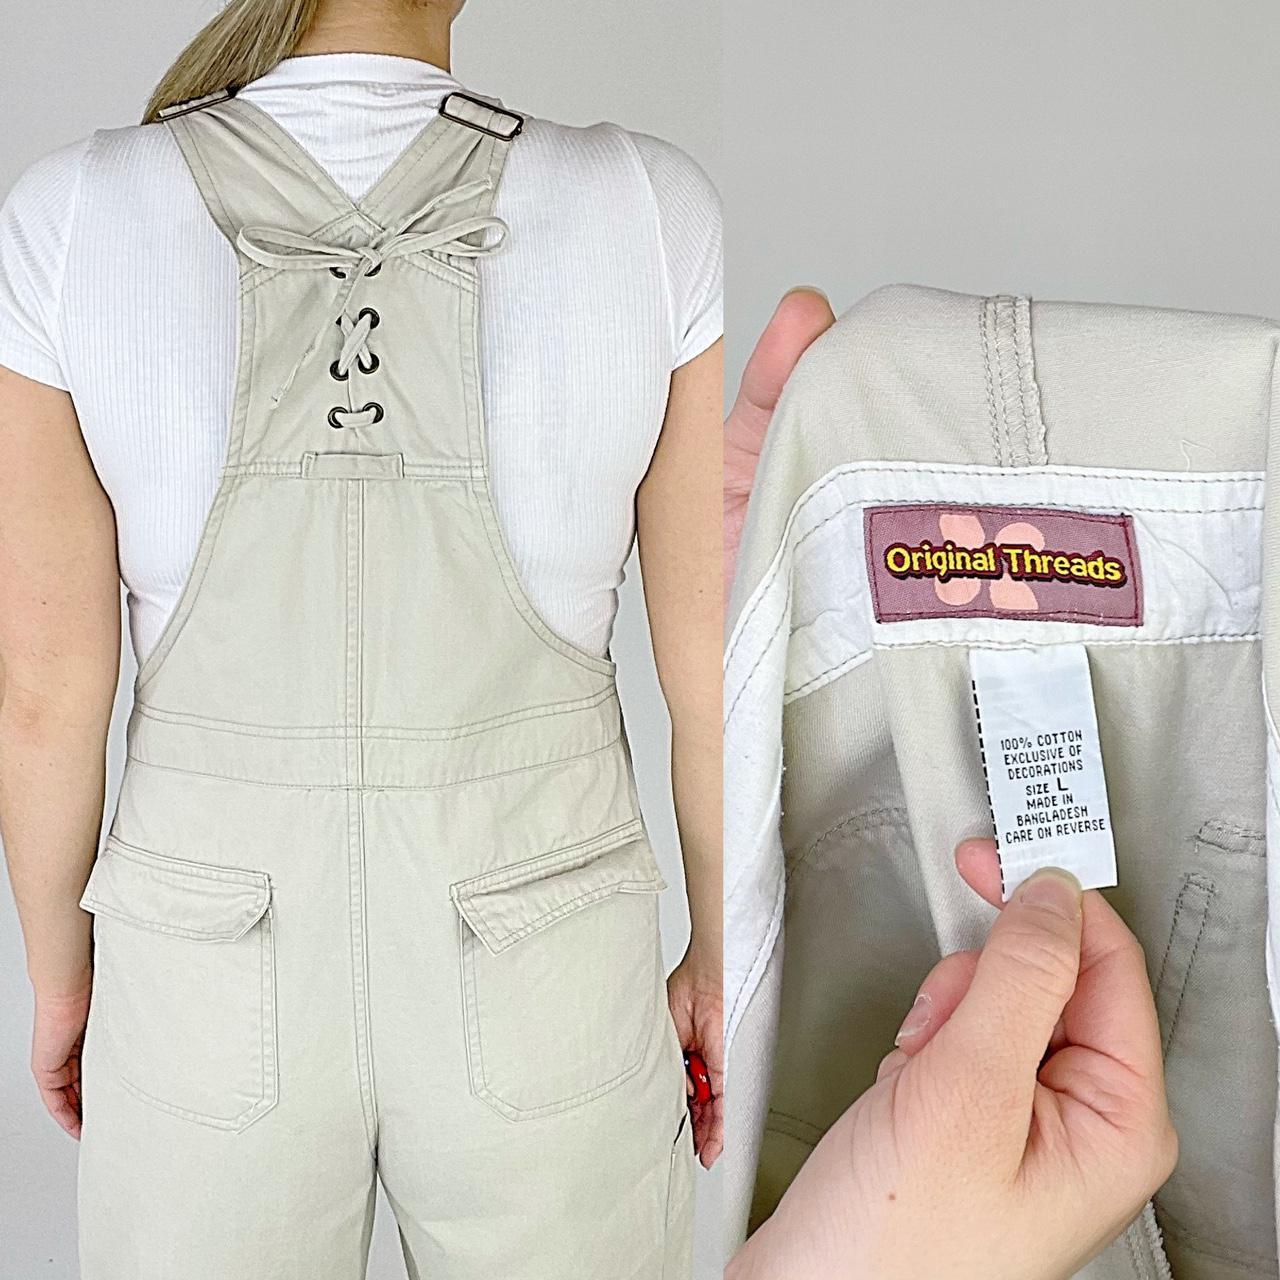 Product Image 4 - Vintage 90s khaki overalls! 
Cute